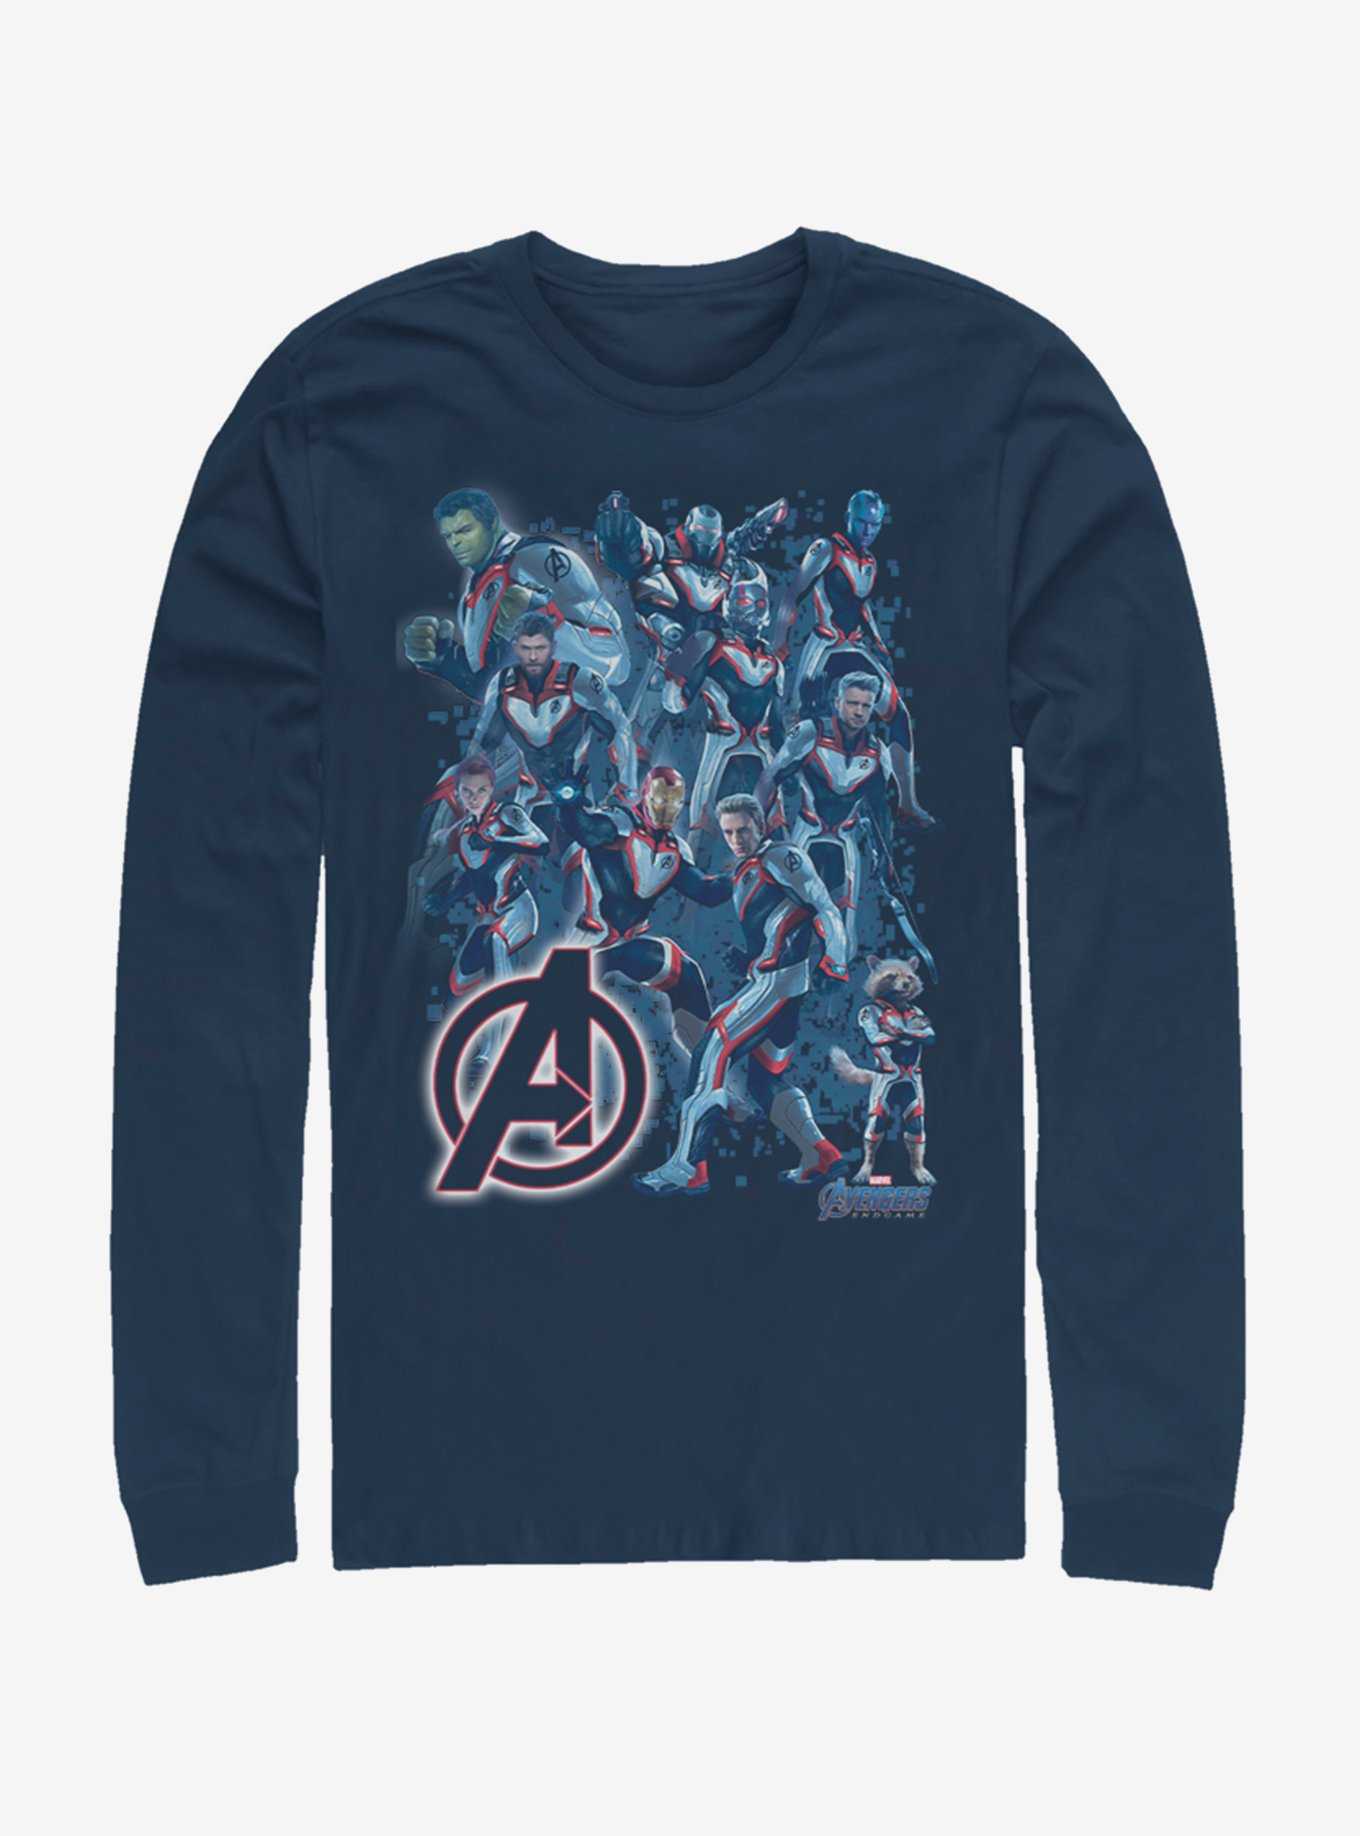 Marvel Avengers: Endgame Suit Group Navy Blue Long-Sleeve T-Shirt, , hi-res